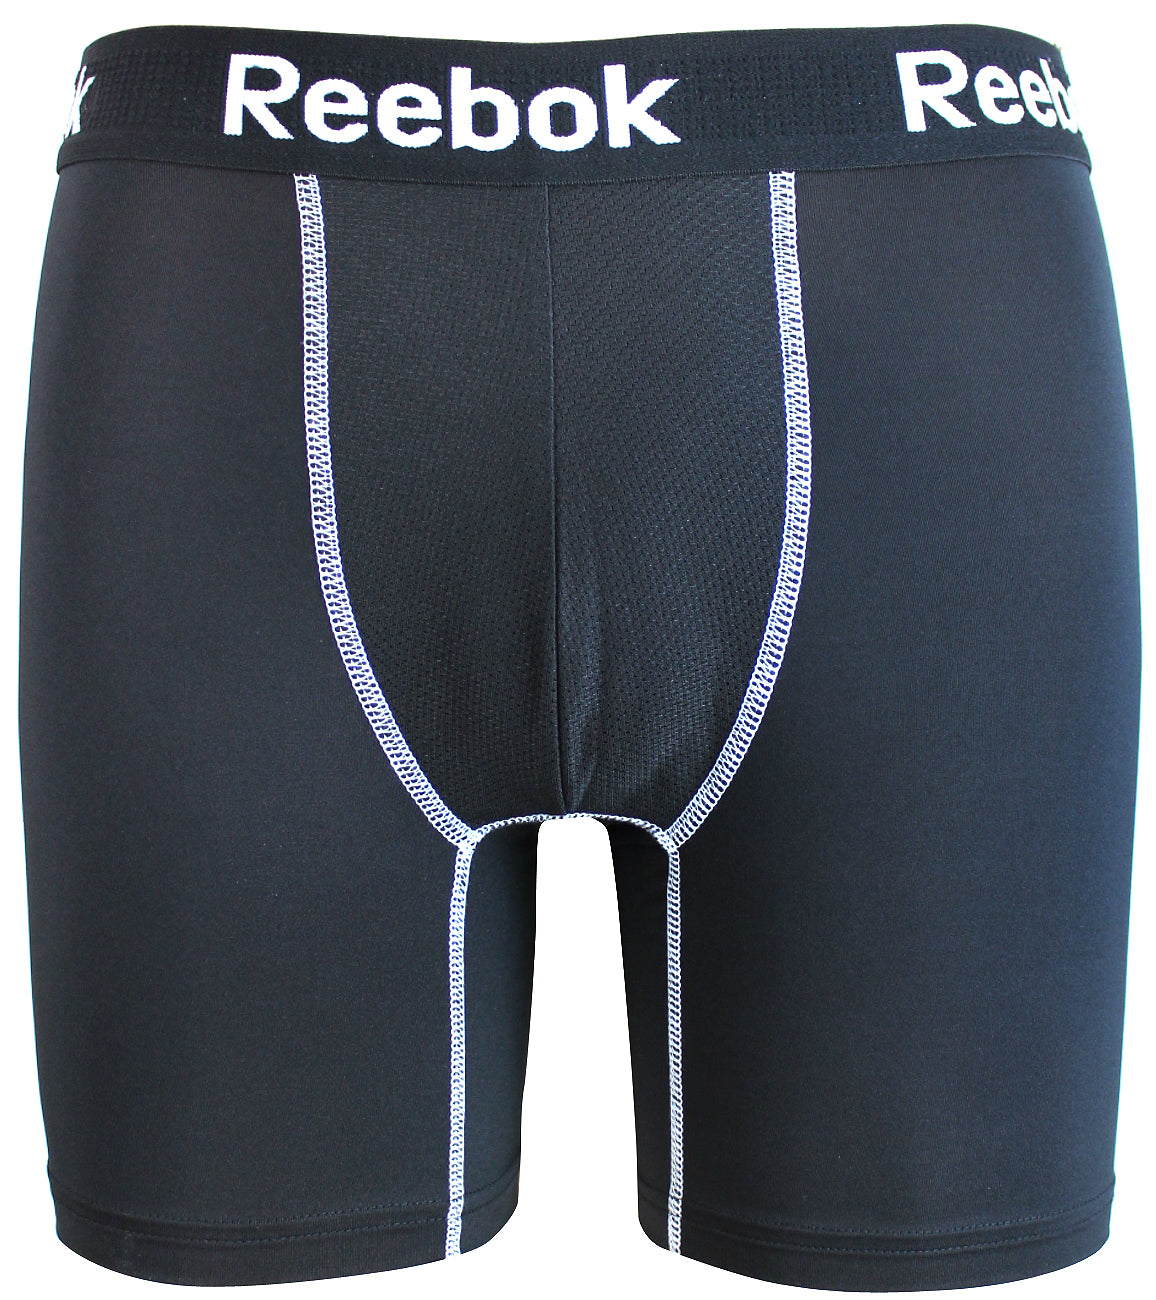 Reebok Mens Performance Training Boxer Briefs Black